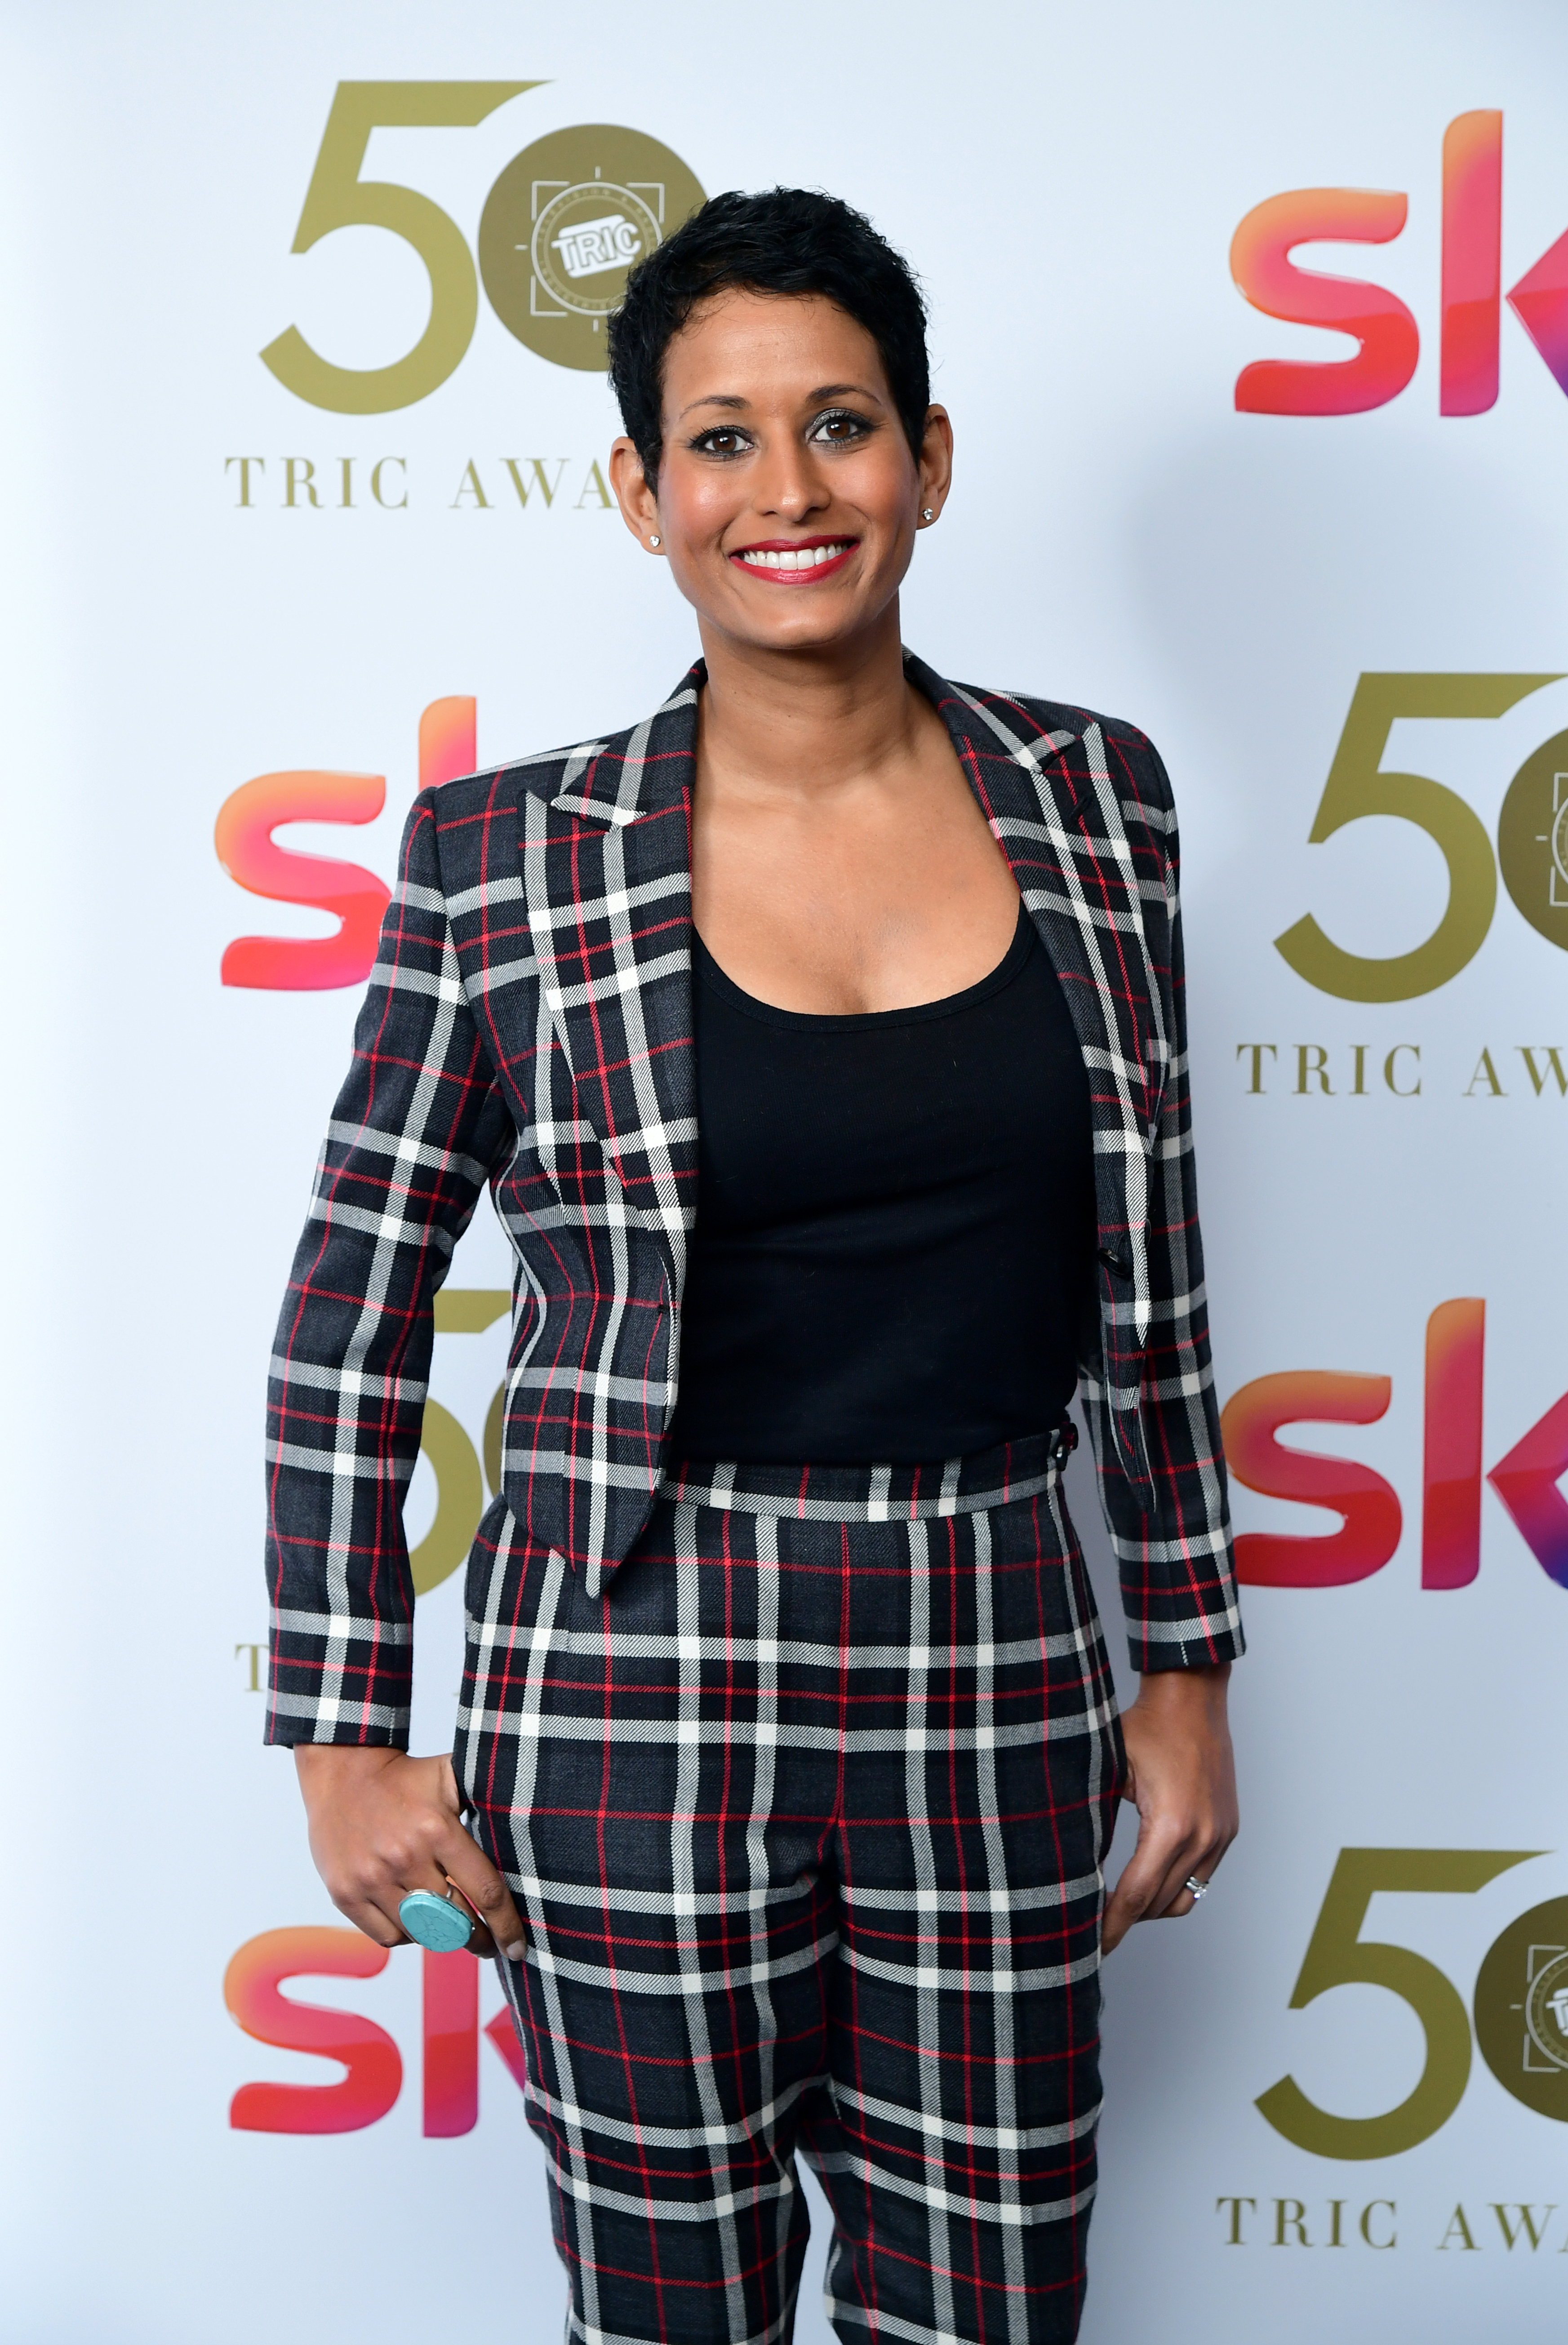 Naga Munchetty attending the TRIC Awards 2019 50th Birthday Celebration held at the Grosvenor House Hotel, London.